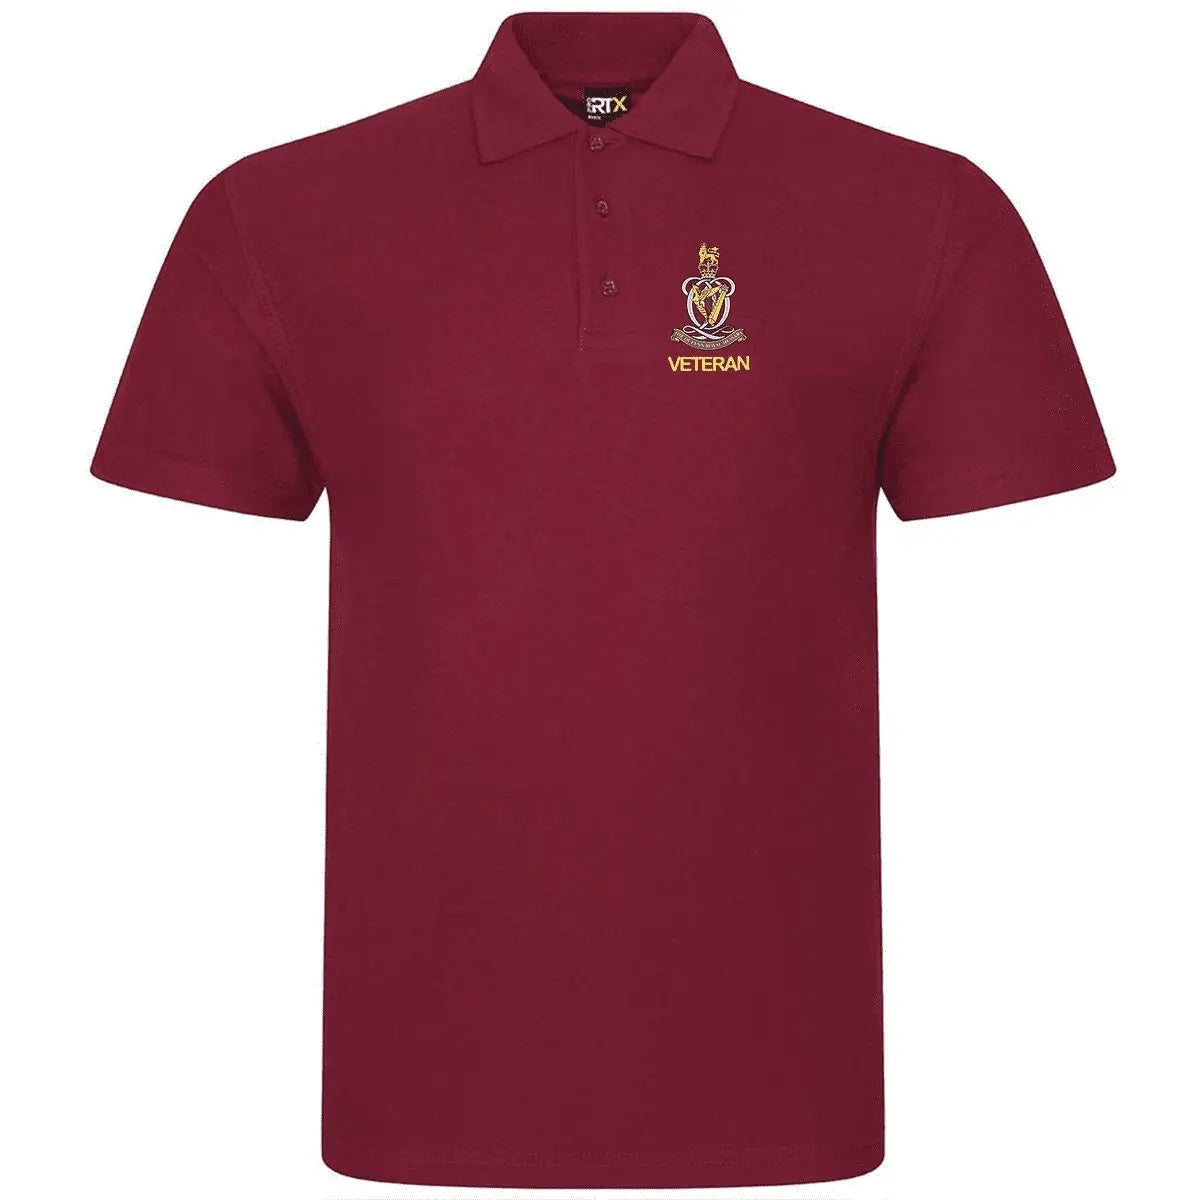 Queens Royal Hussars Veteran Polo Shirt redplume